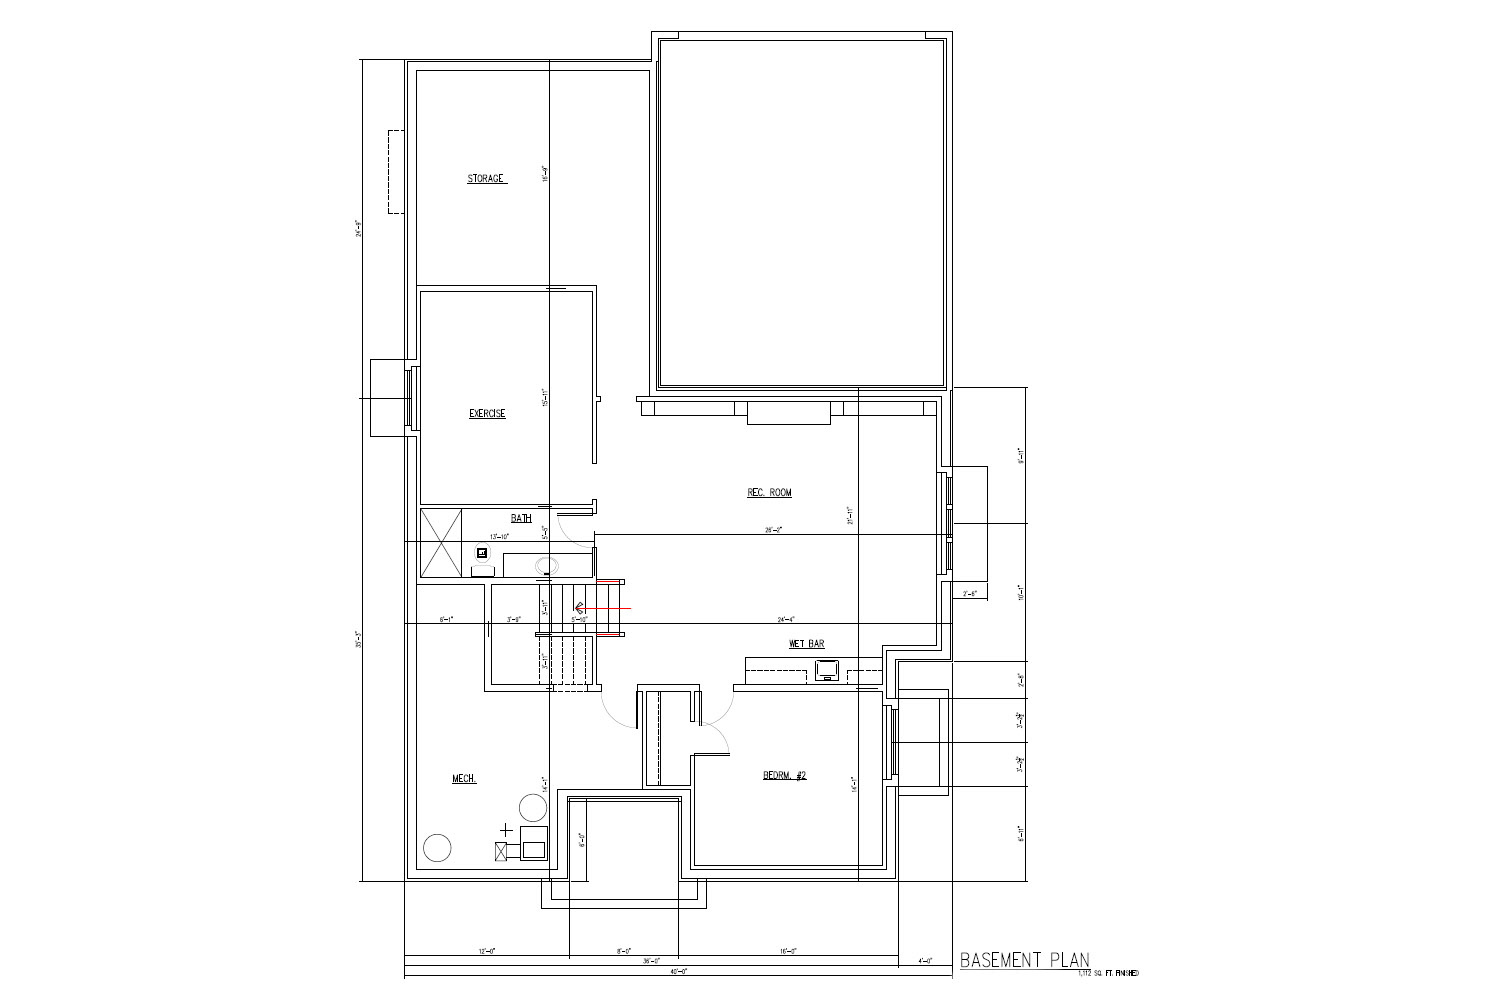 TJB #677 “Tammy” Villa Home Plan Basement Floor Plan